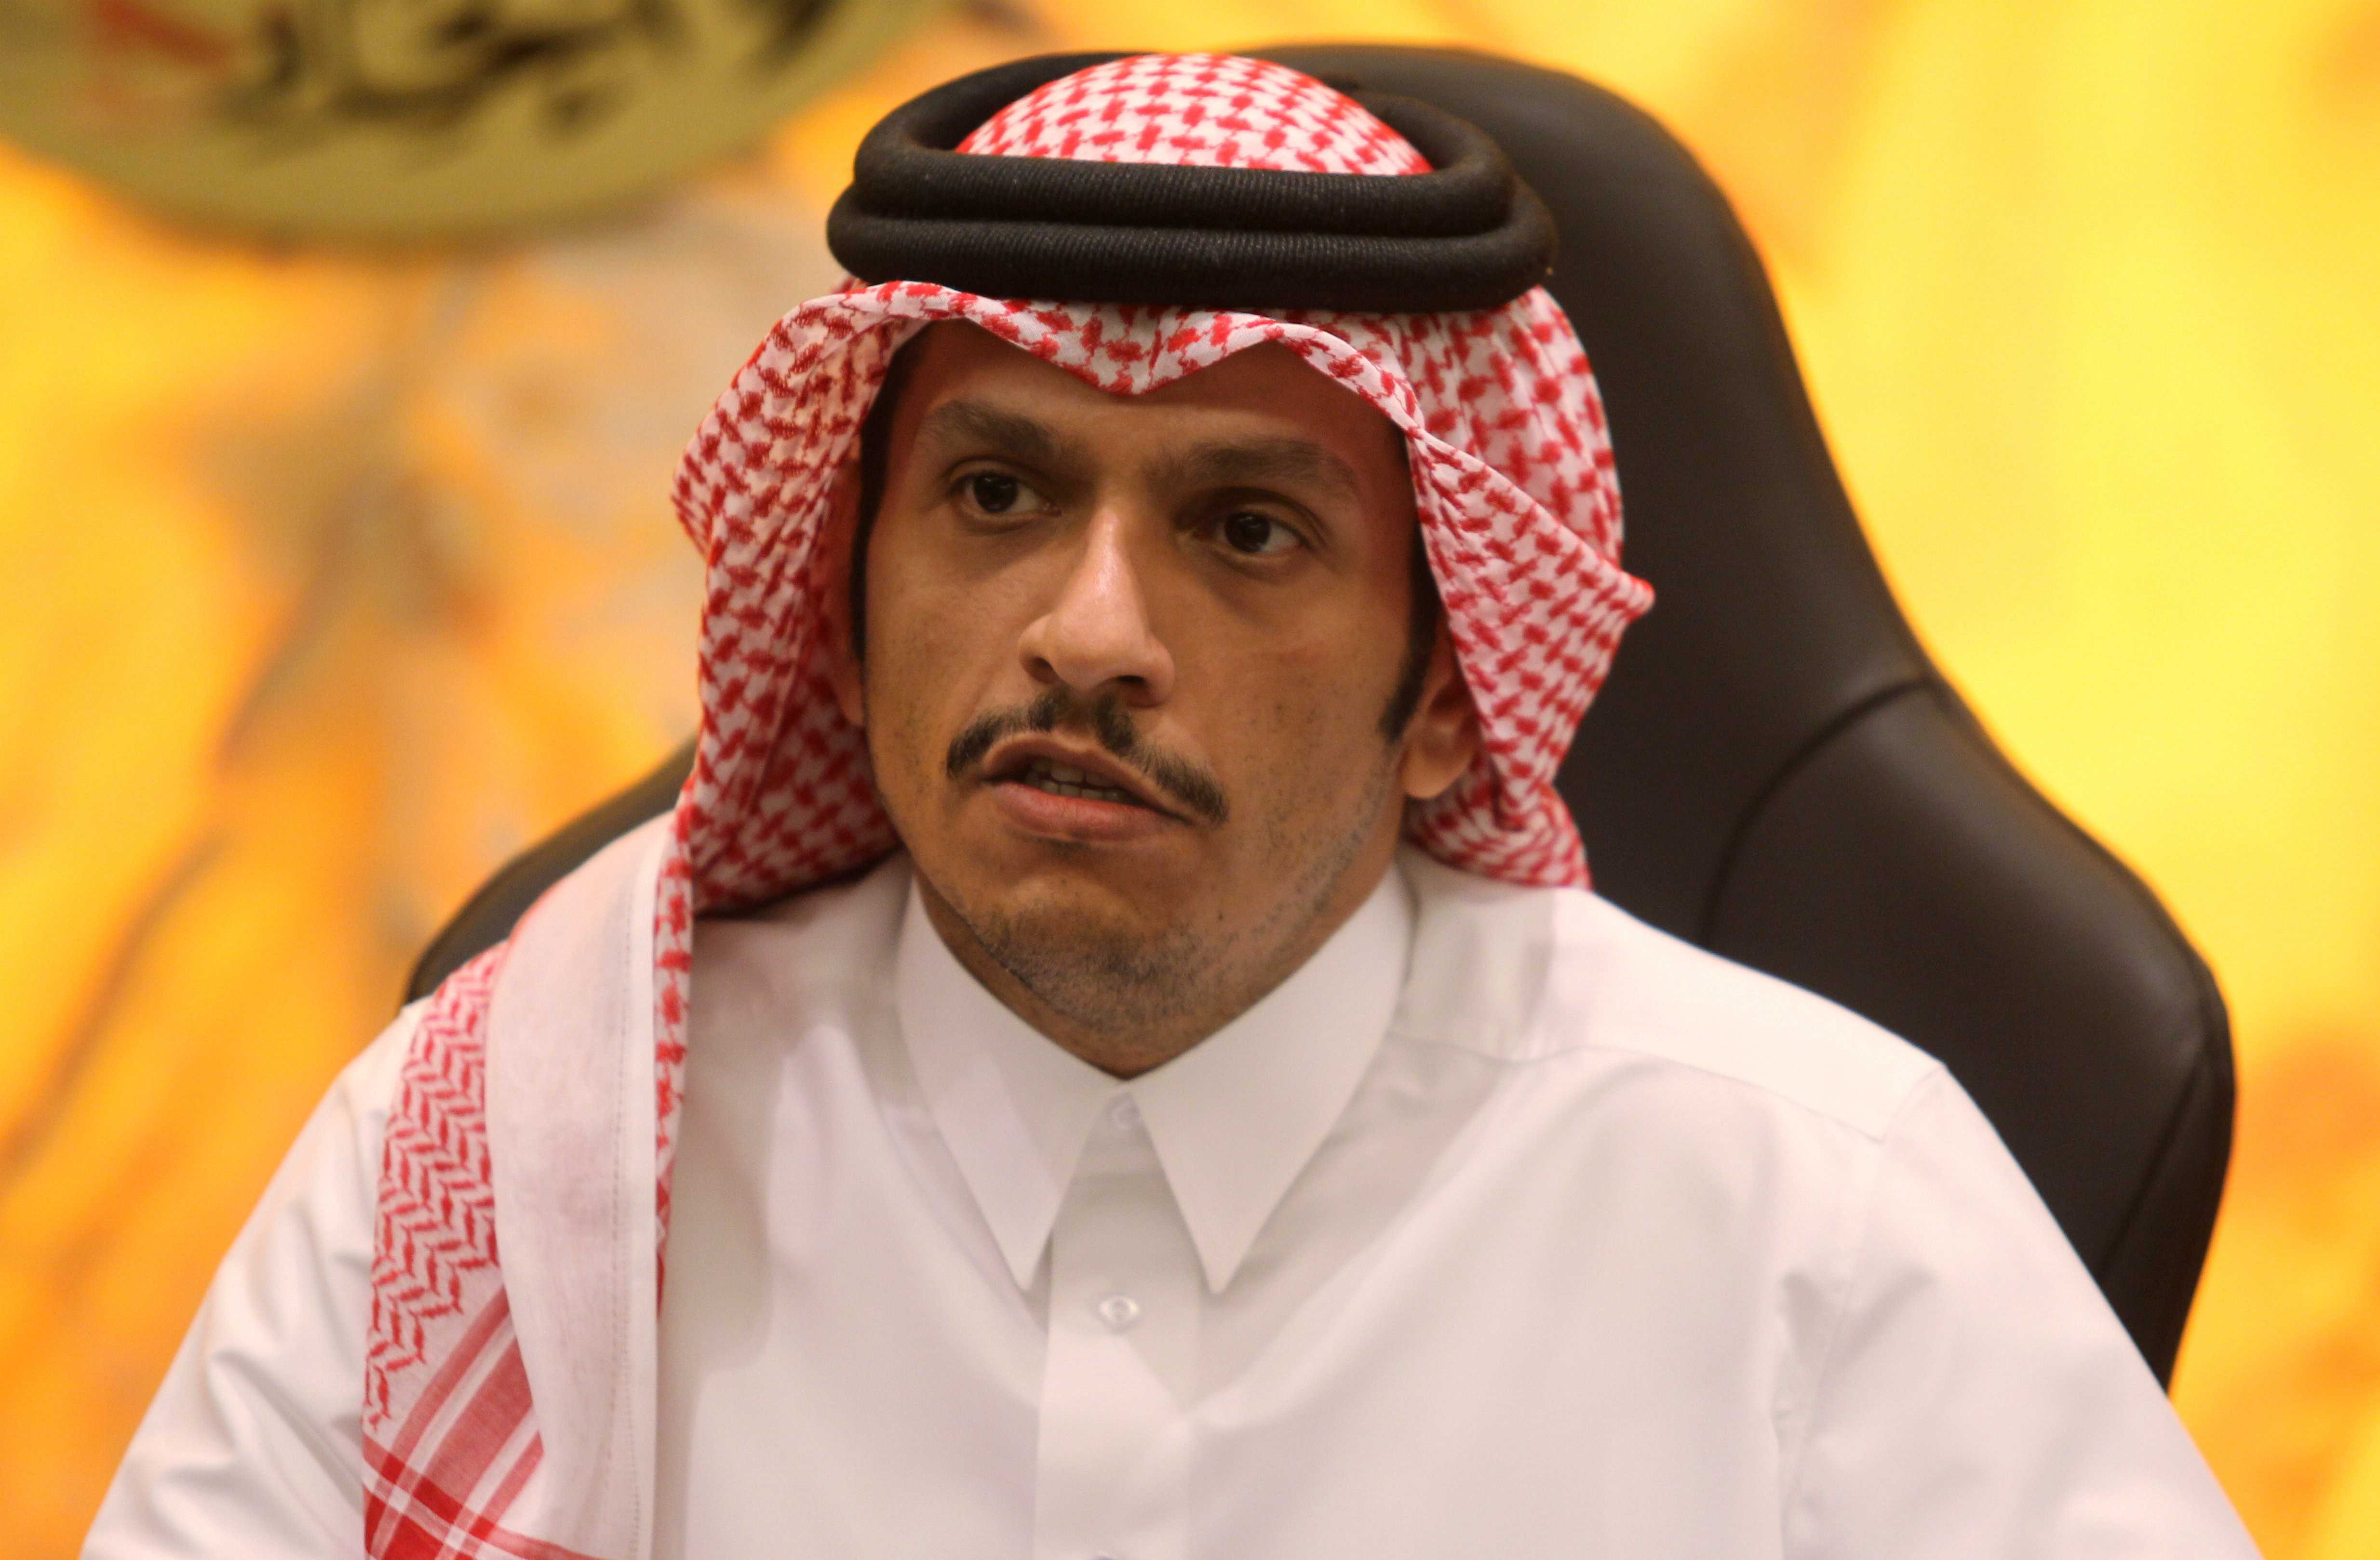 Qatar's Foreign Minister Sheikh Mohammed bin Abdulrahman al-Thani attends an interview in Doha